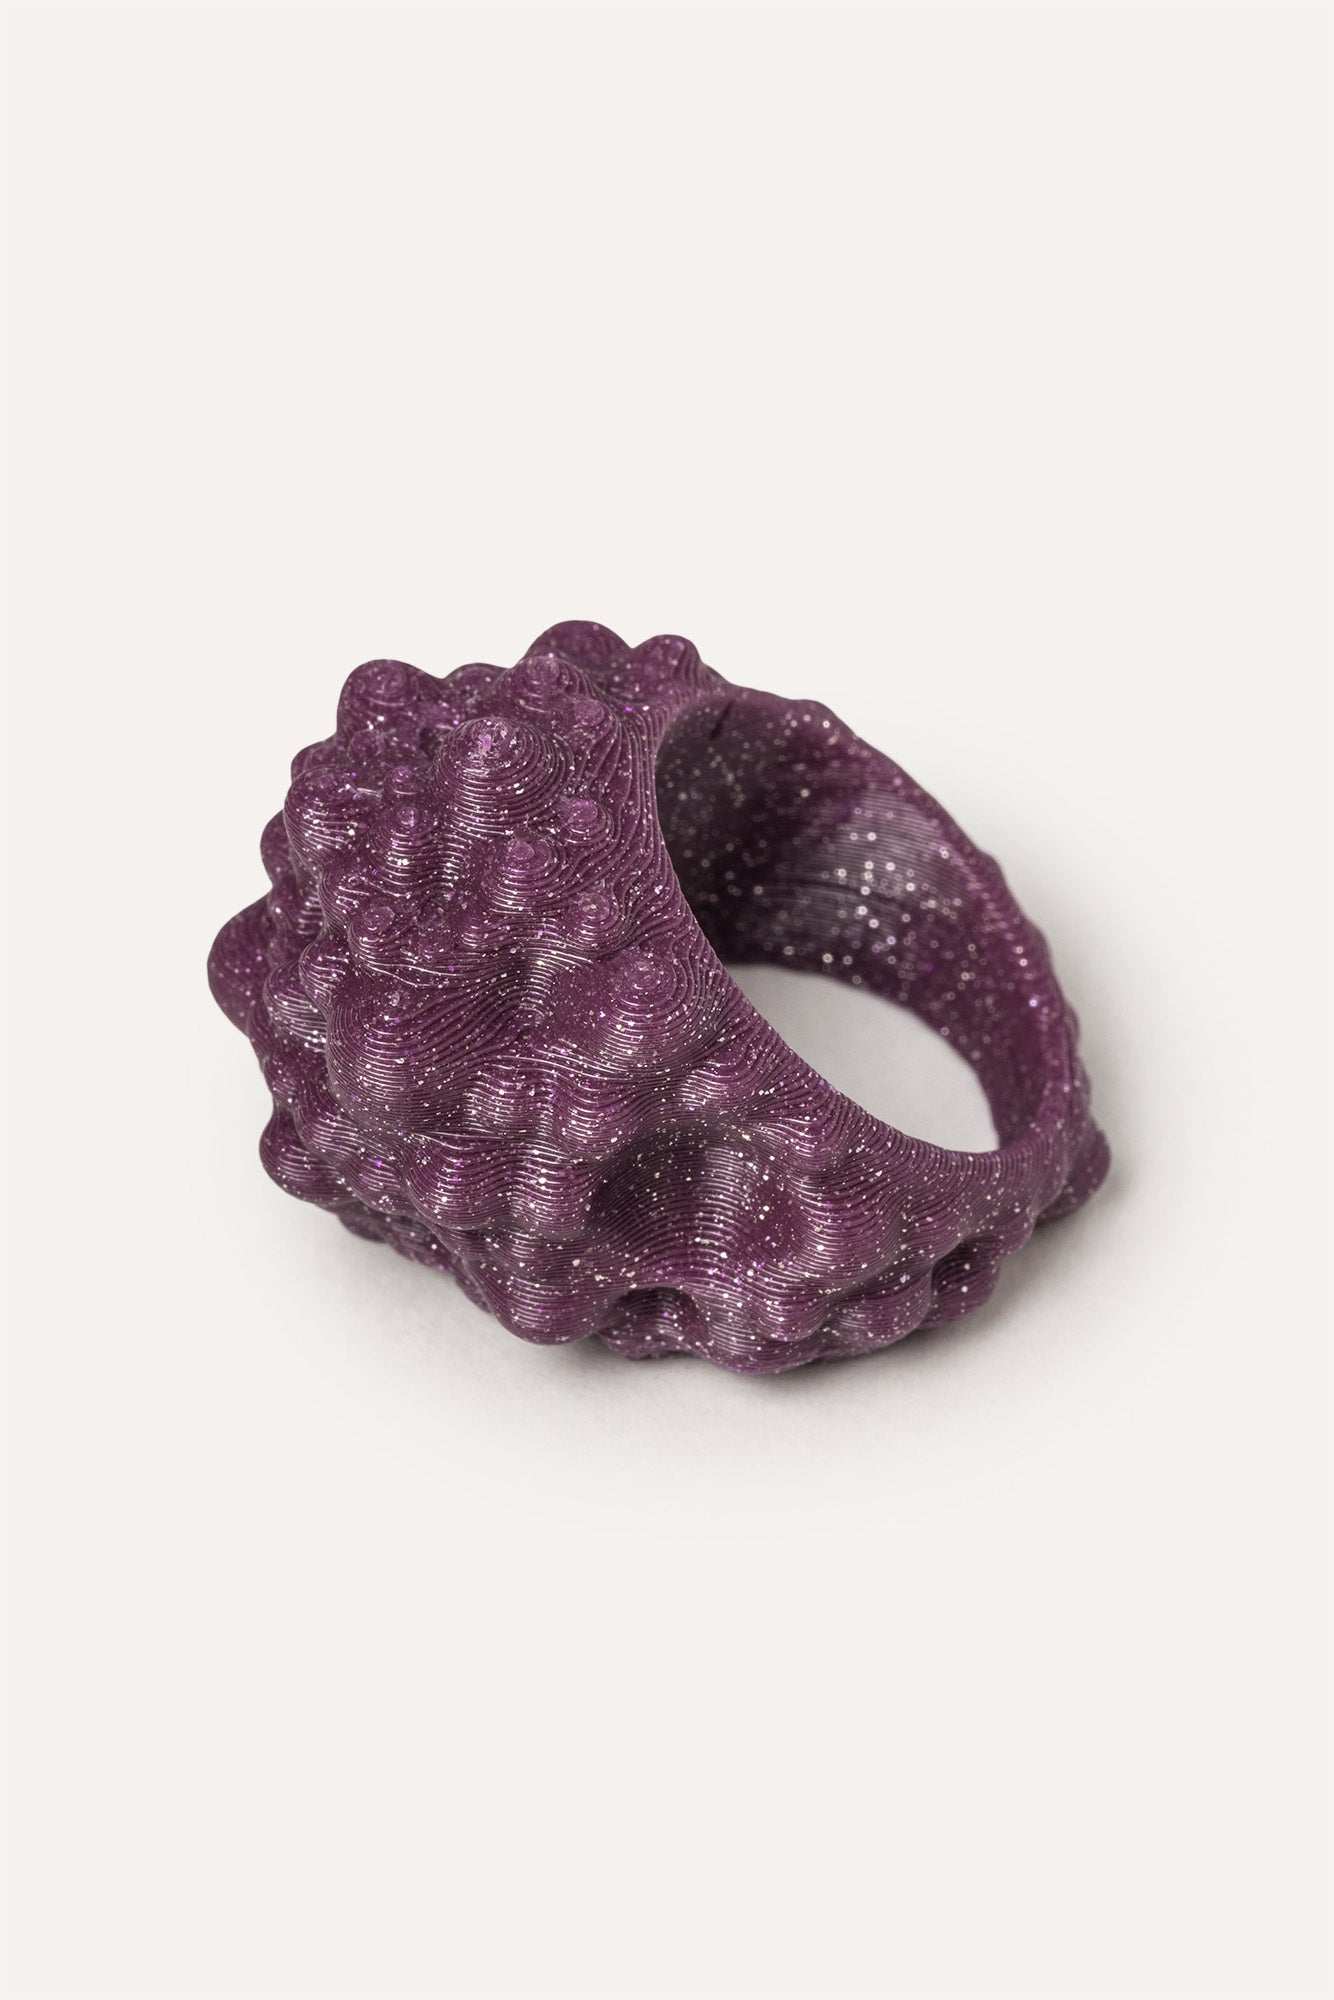 purple oro no vegan ring 3d printed